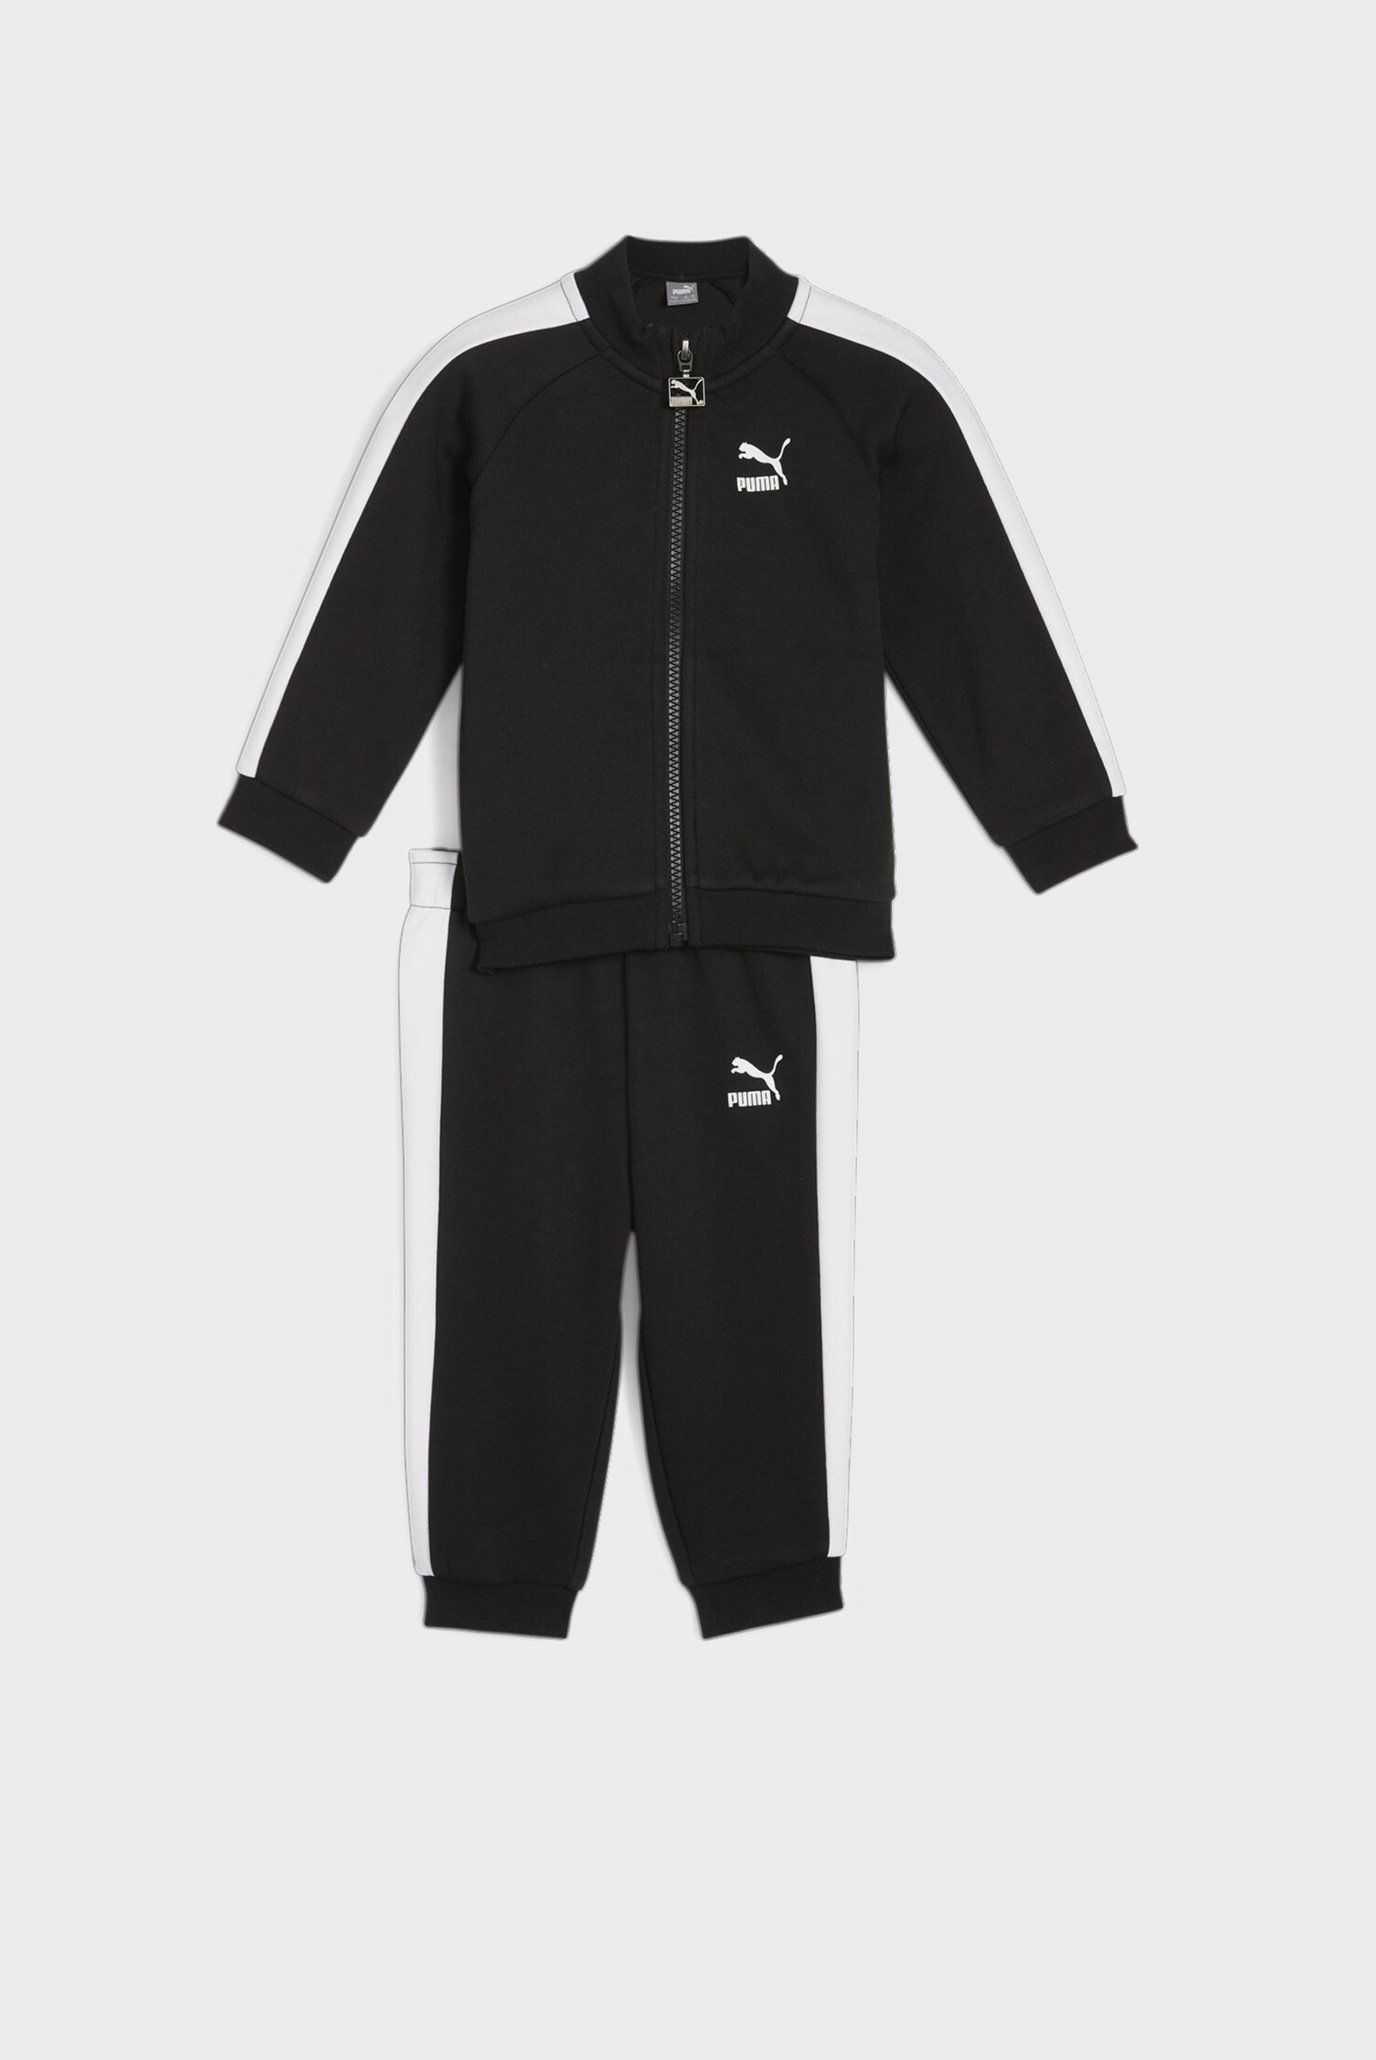 Дитячий чорний спортивний костюм (кофта, штани)  MINICATS T7 ICONIC Baby Tracksuit Set 1